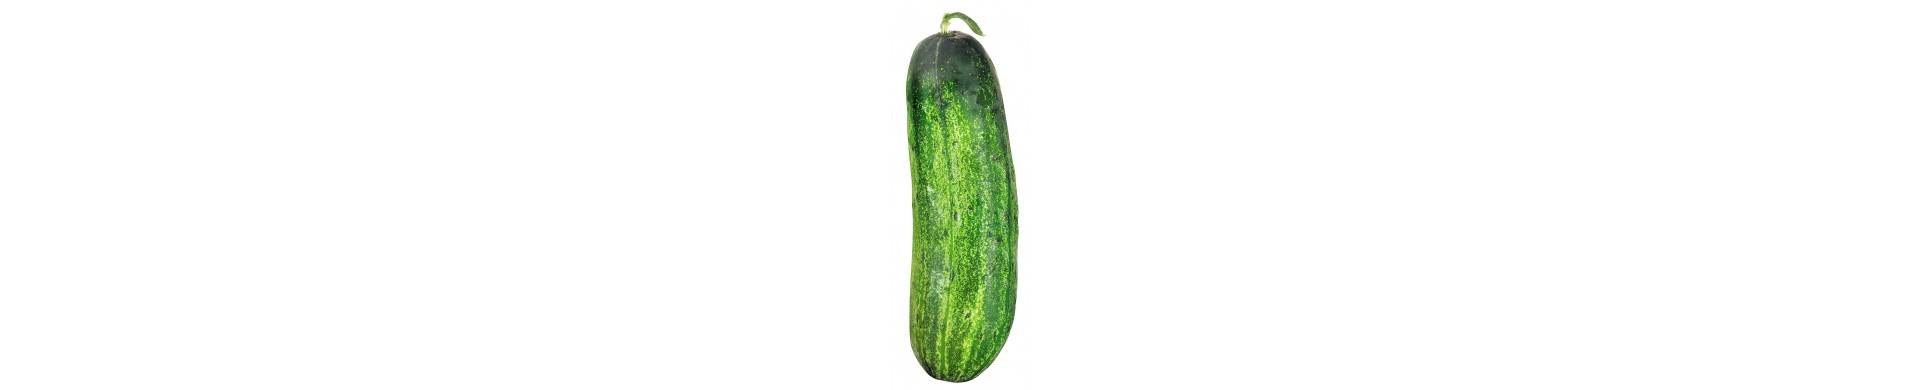 Plant cucumbers - Buy cucumber plant